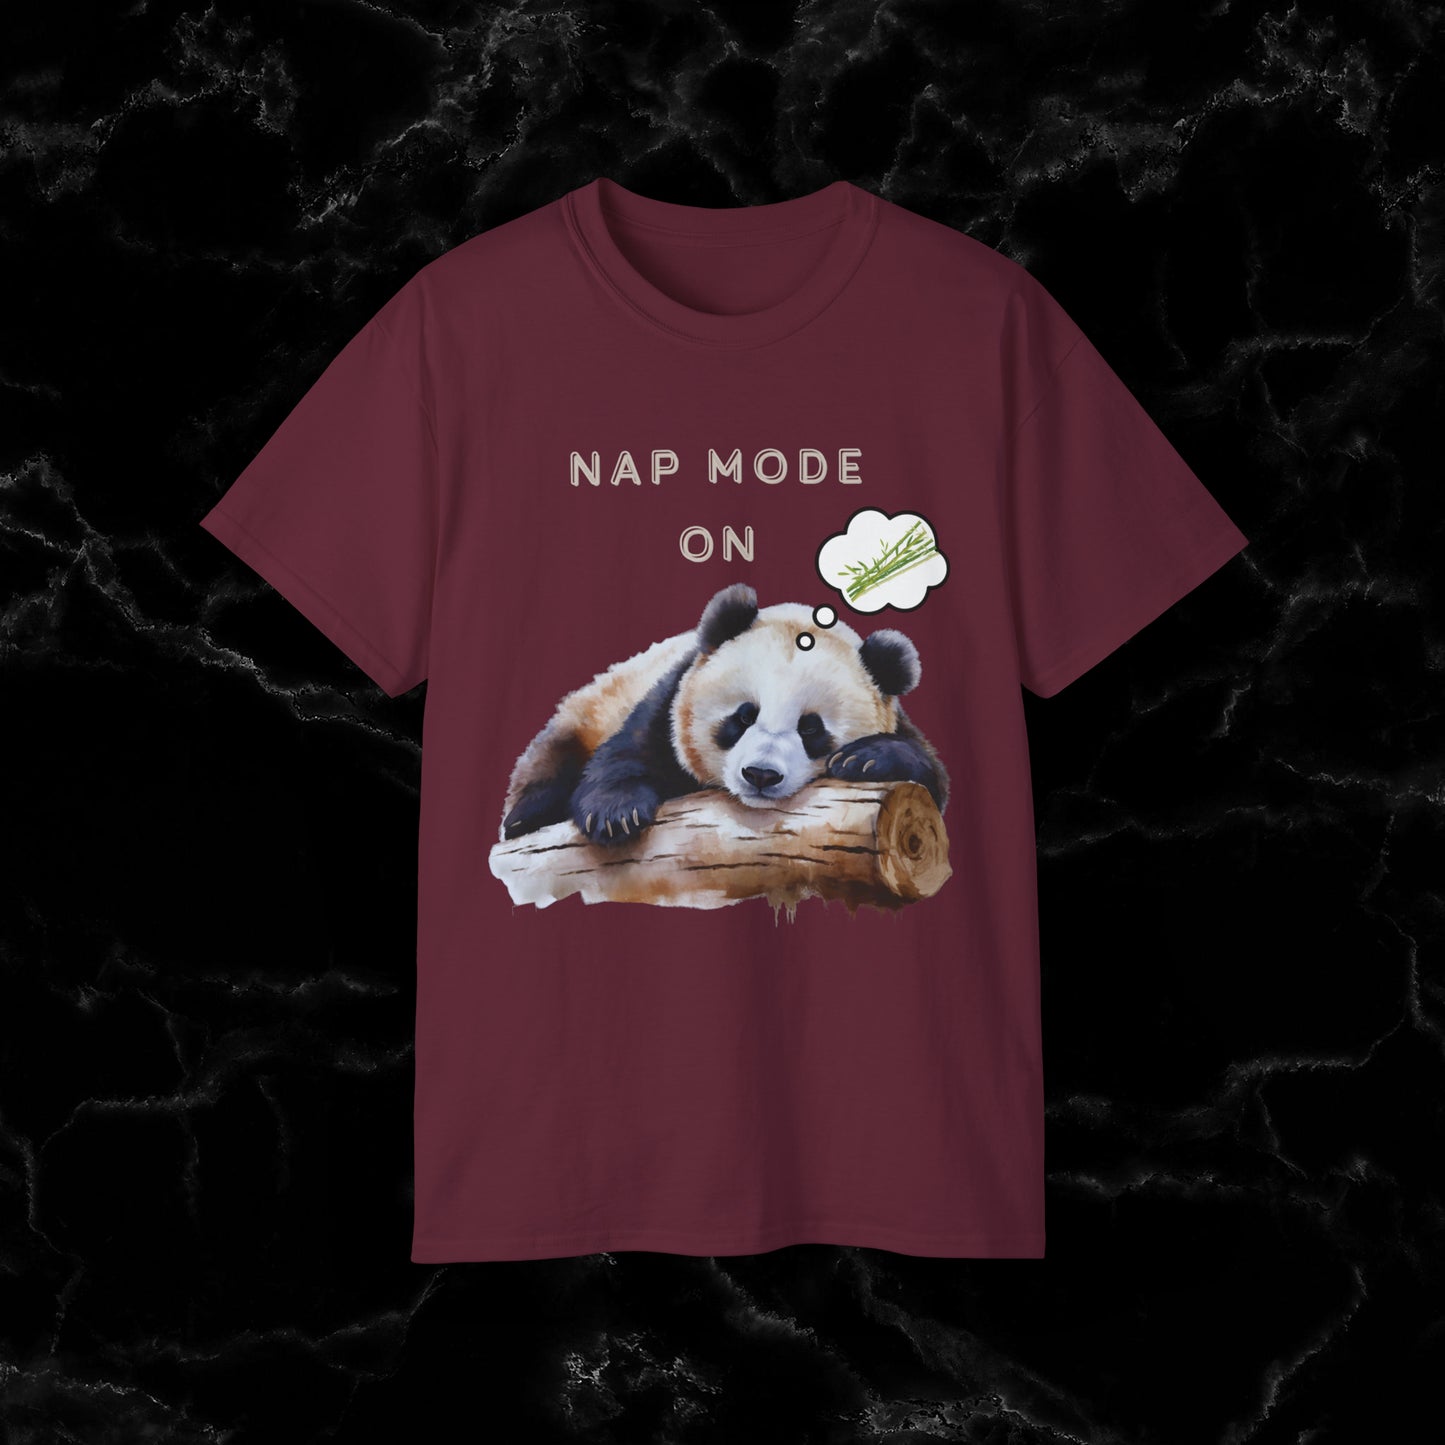 Nap Time Panda Unisex Funny Tee - Hilarious Panda Nap Mode On T-Shirt Maroon S 